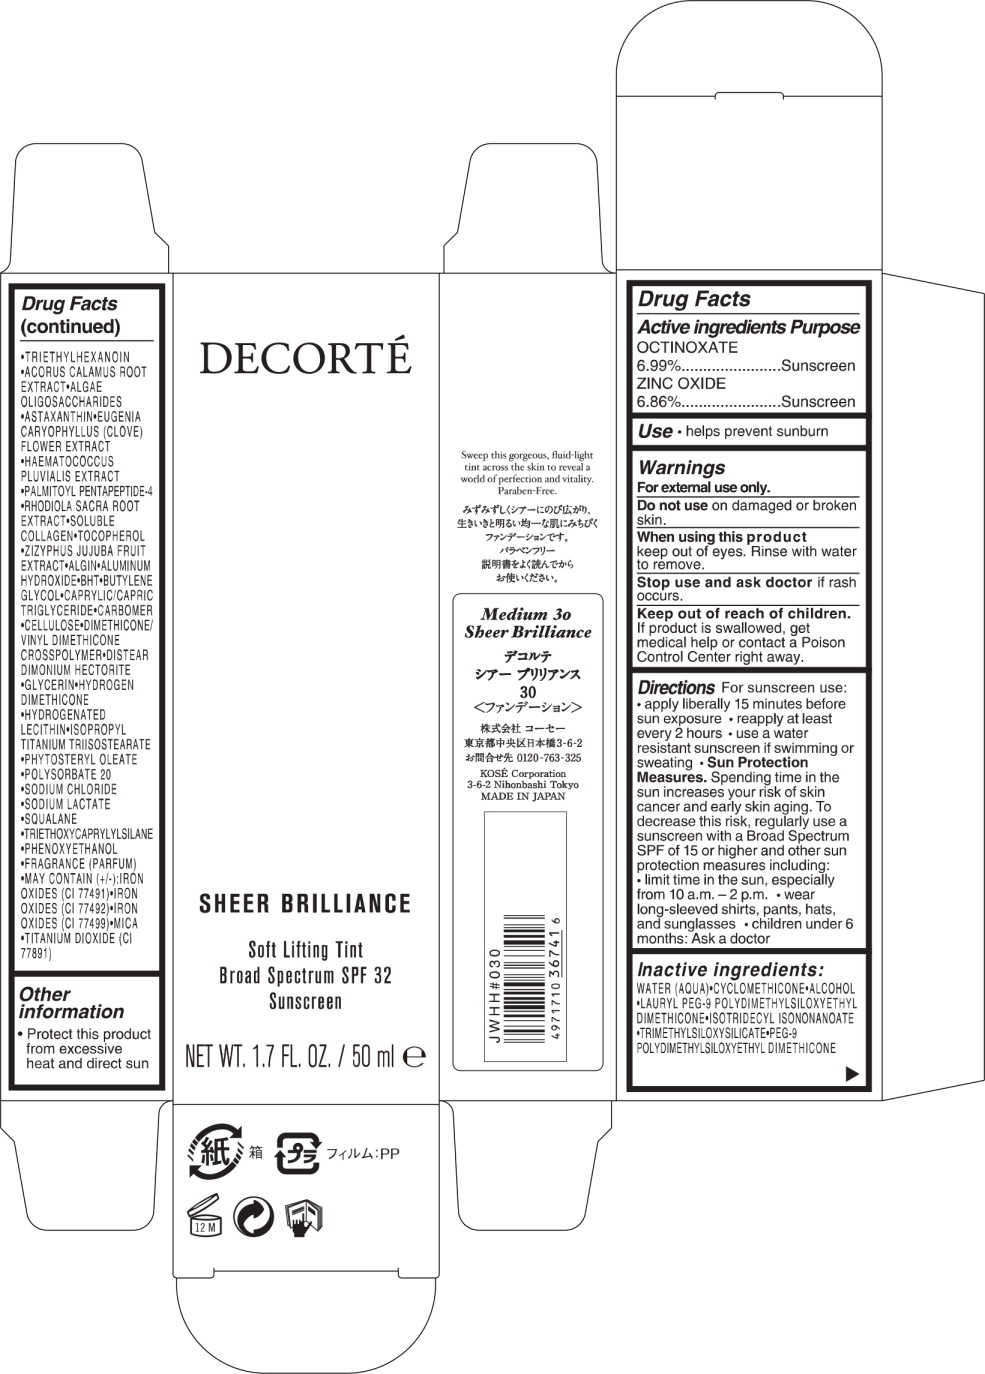 Principal Display Panel - Decorte Sheet Brilliance 30 Level 50 ml Carton Label
